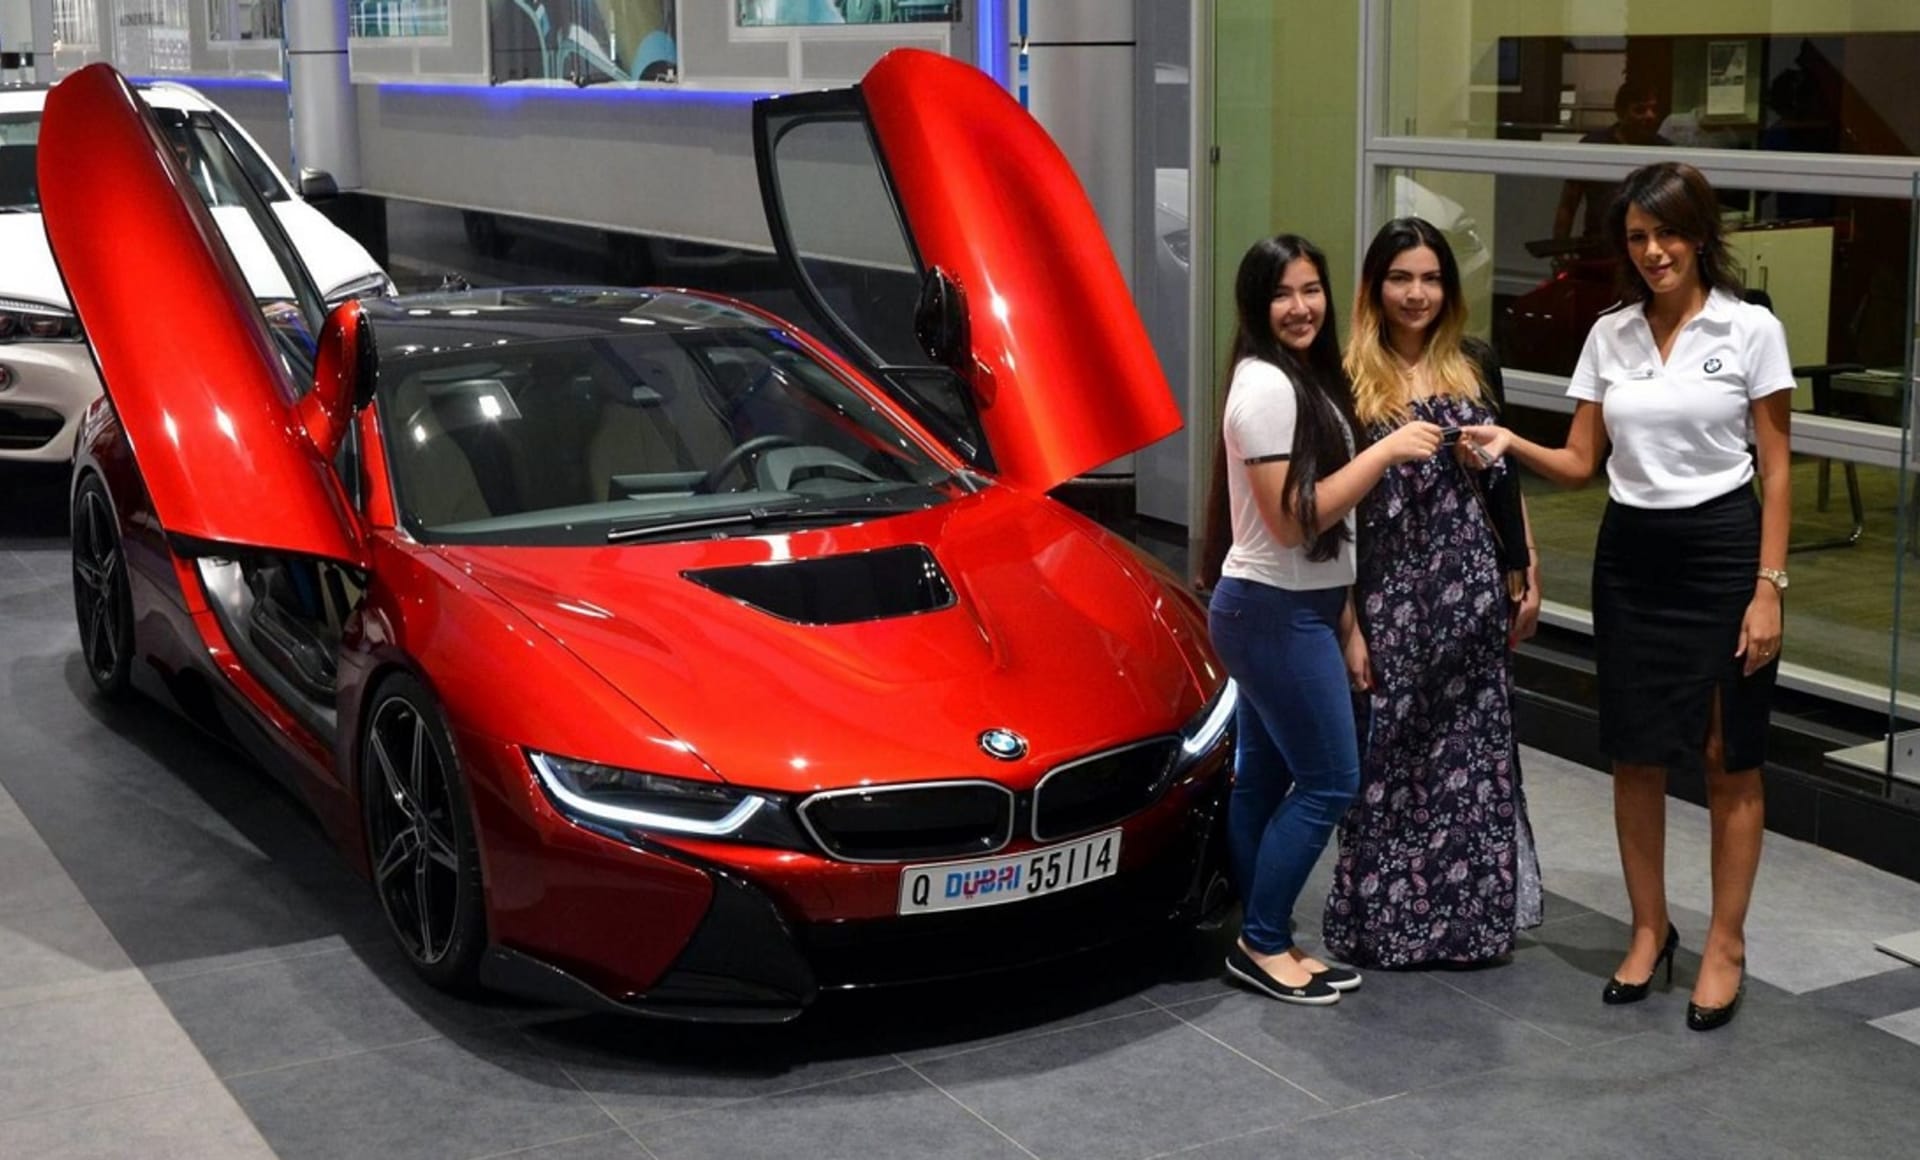 Princezna z Abu Dhabi dostala upravené BMW i8